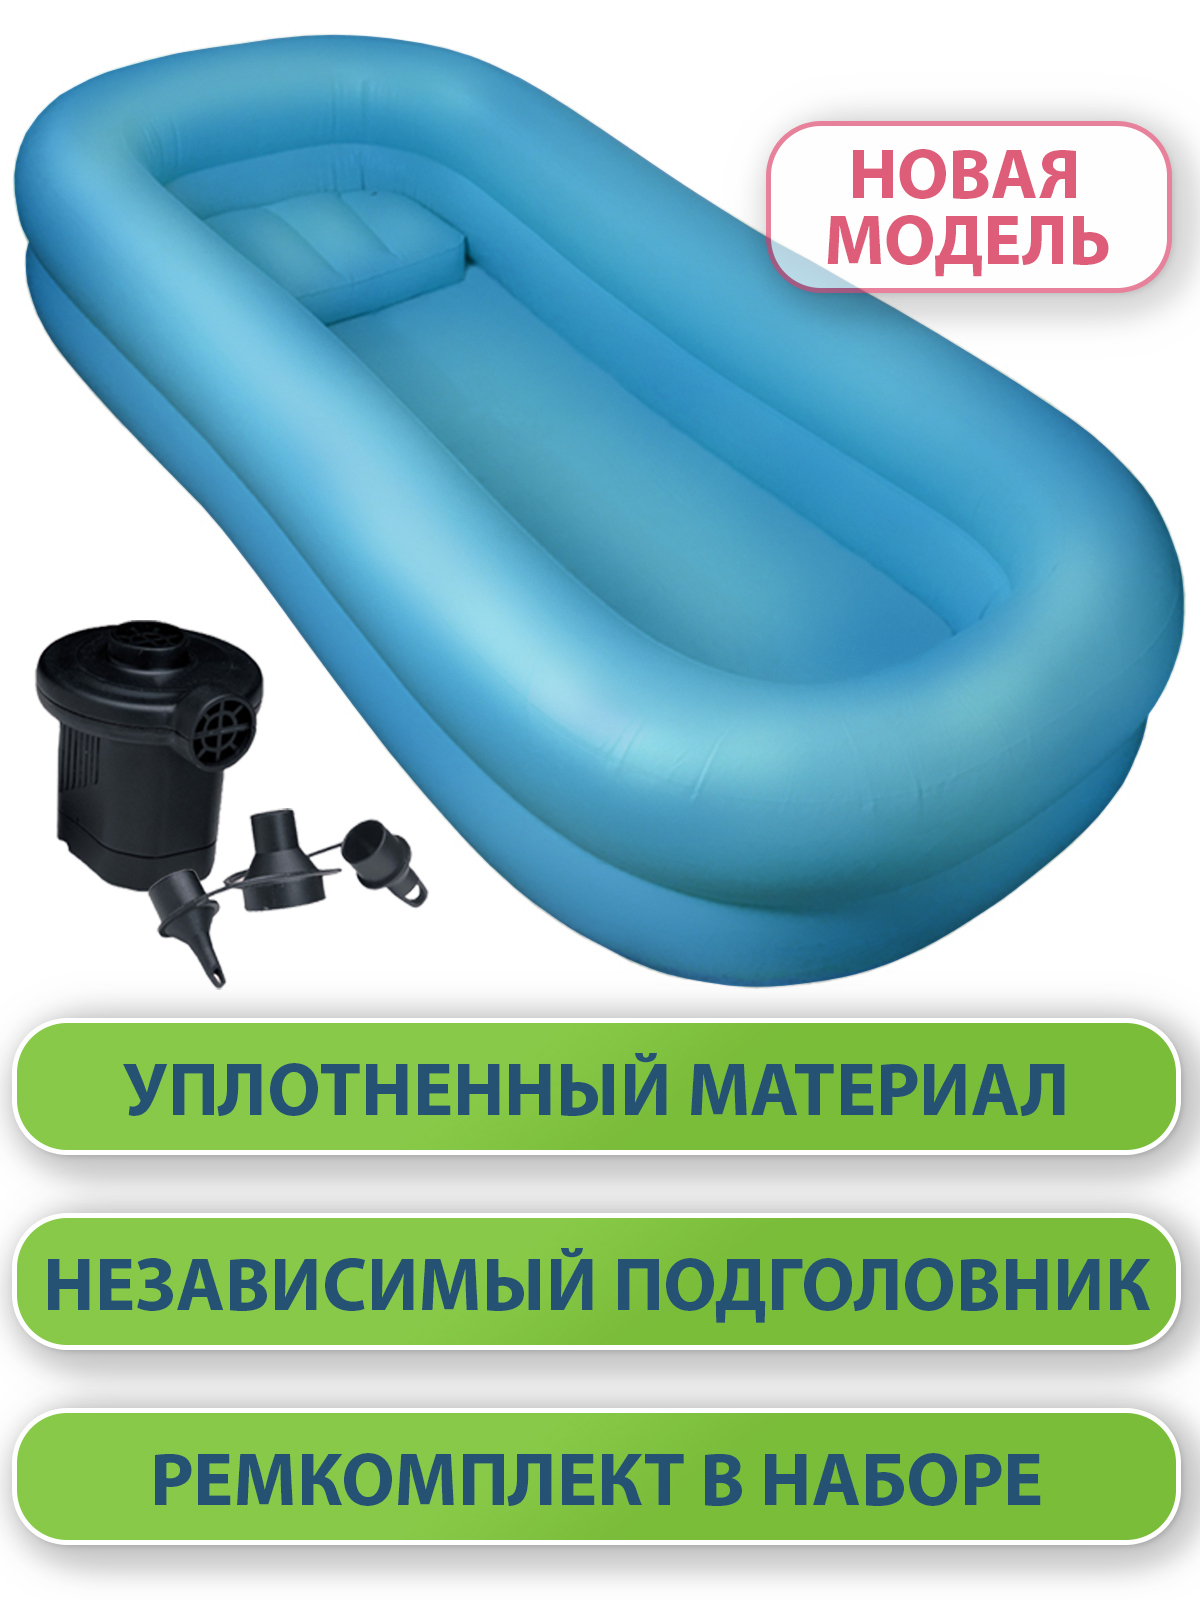 ванна надувная армед для мытья тела человека на кровати